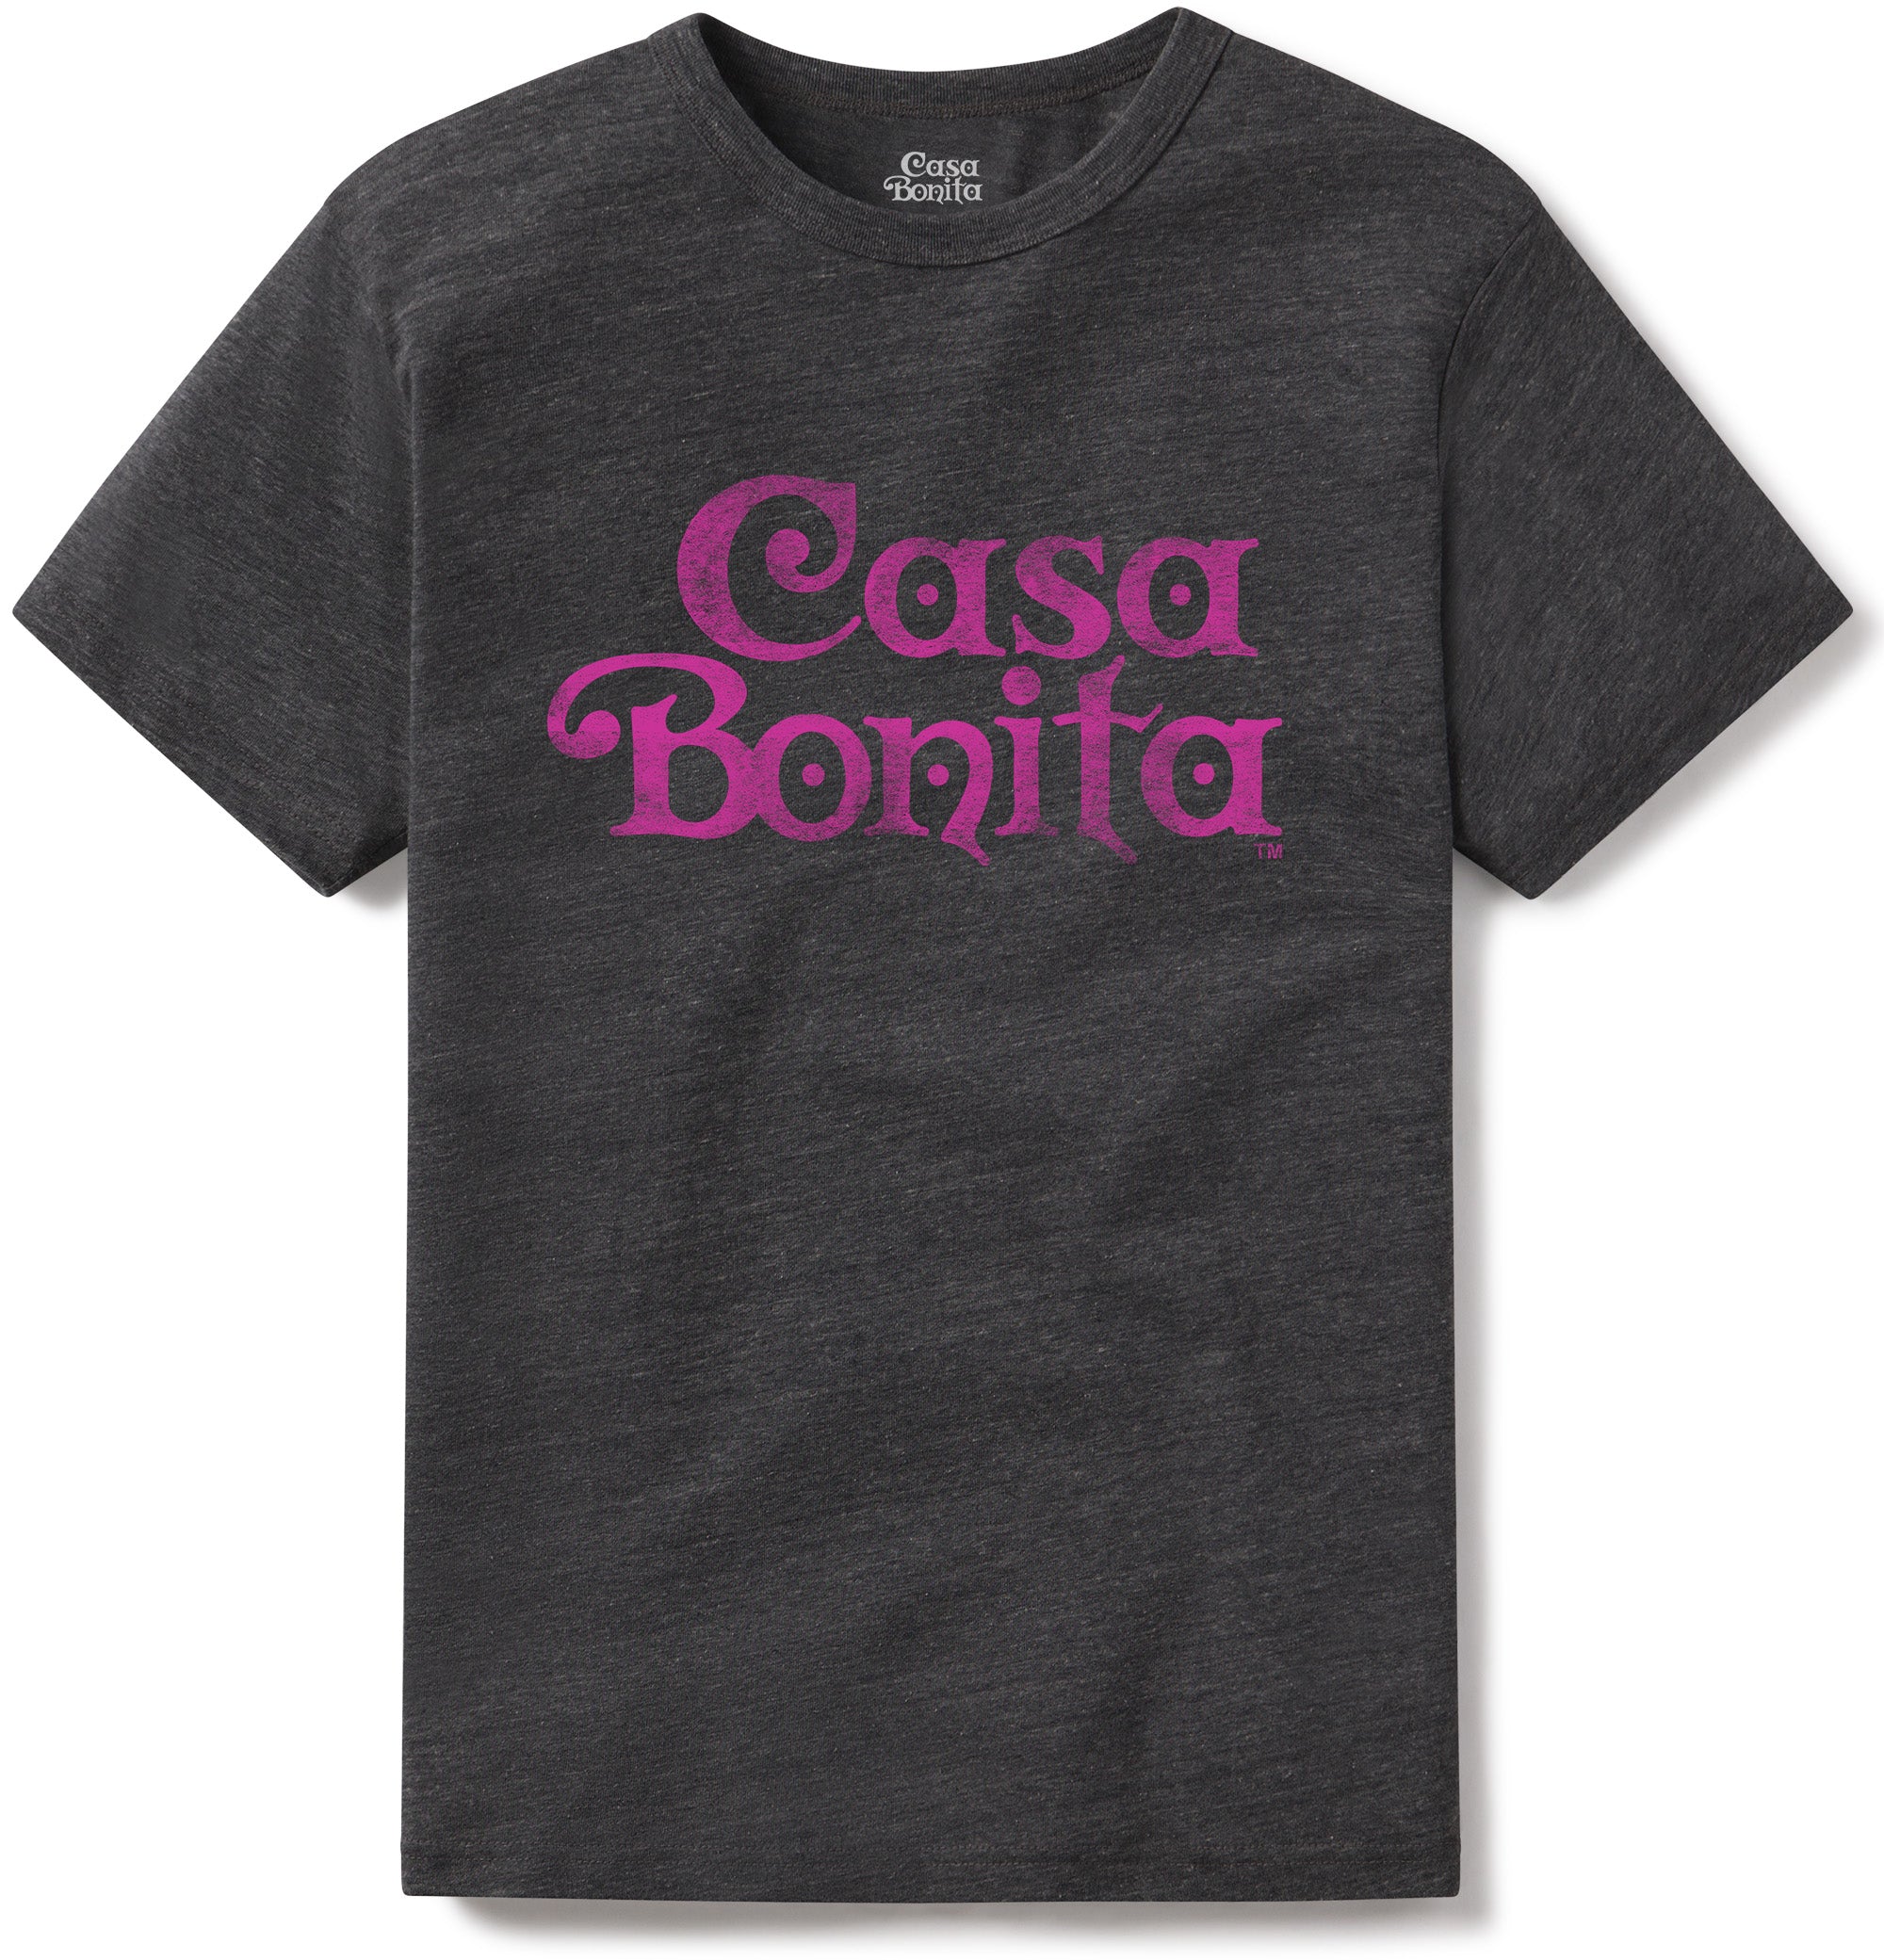 Casa Bonita Gray Distressed Wordmark T-Shirt